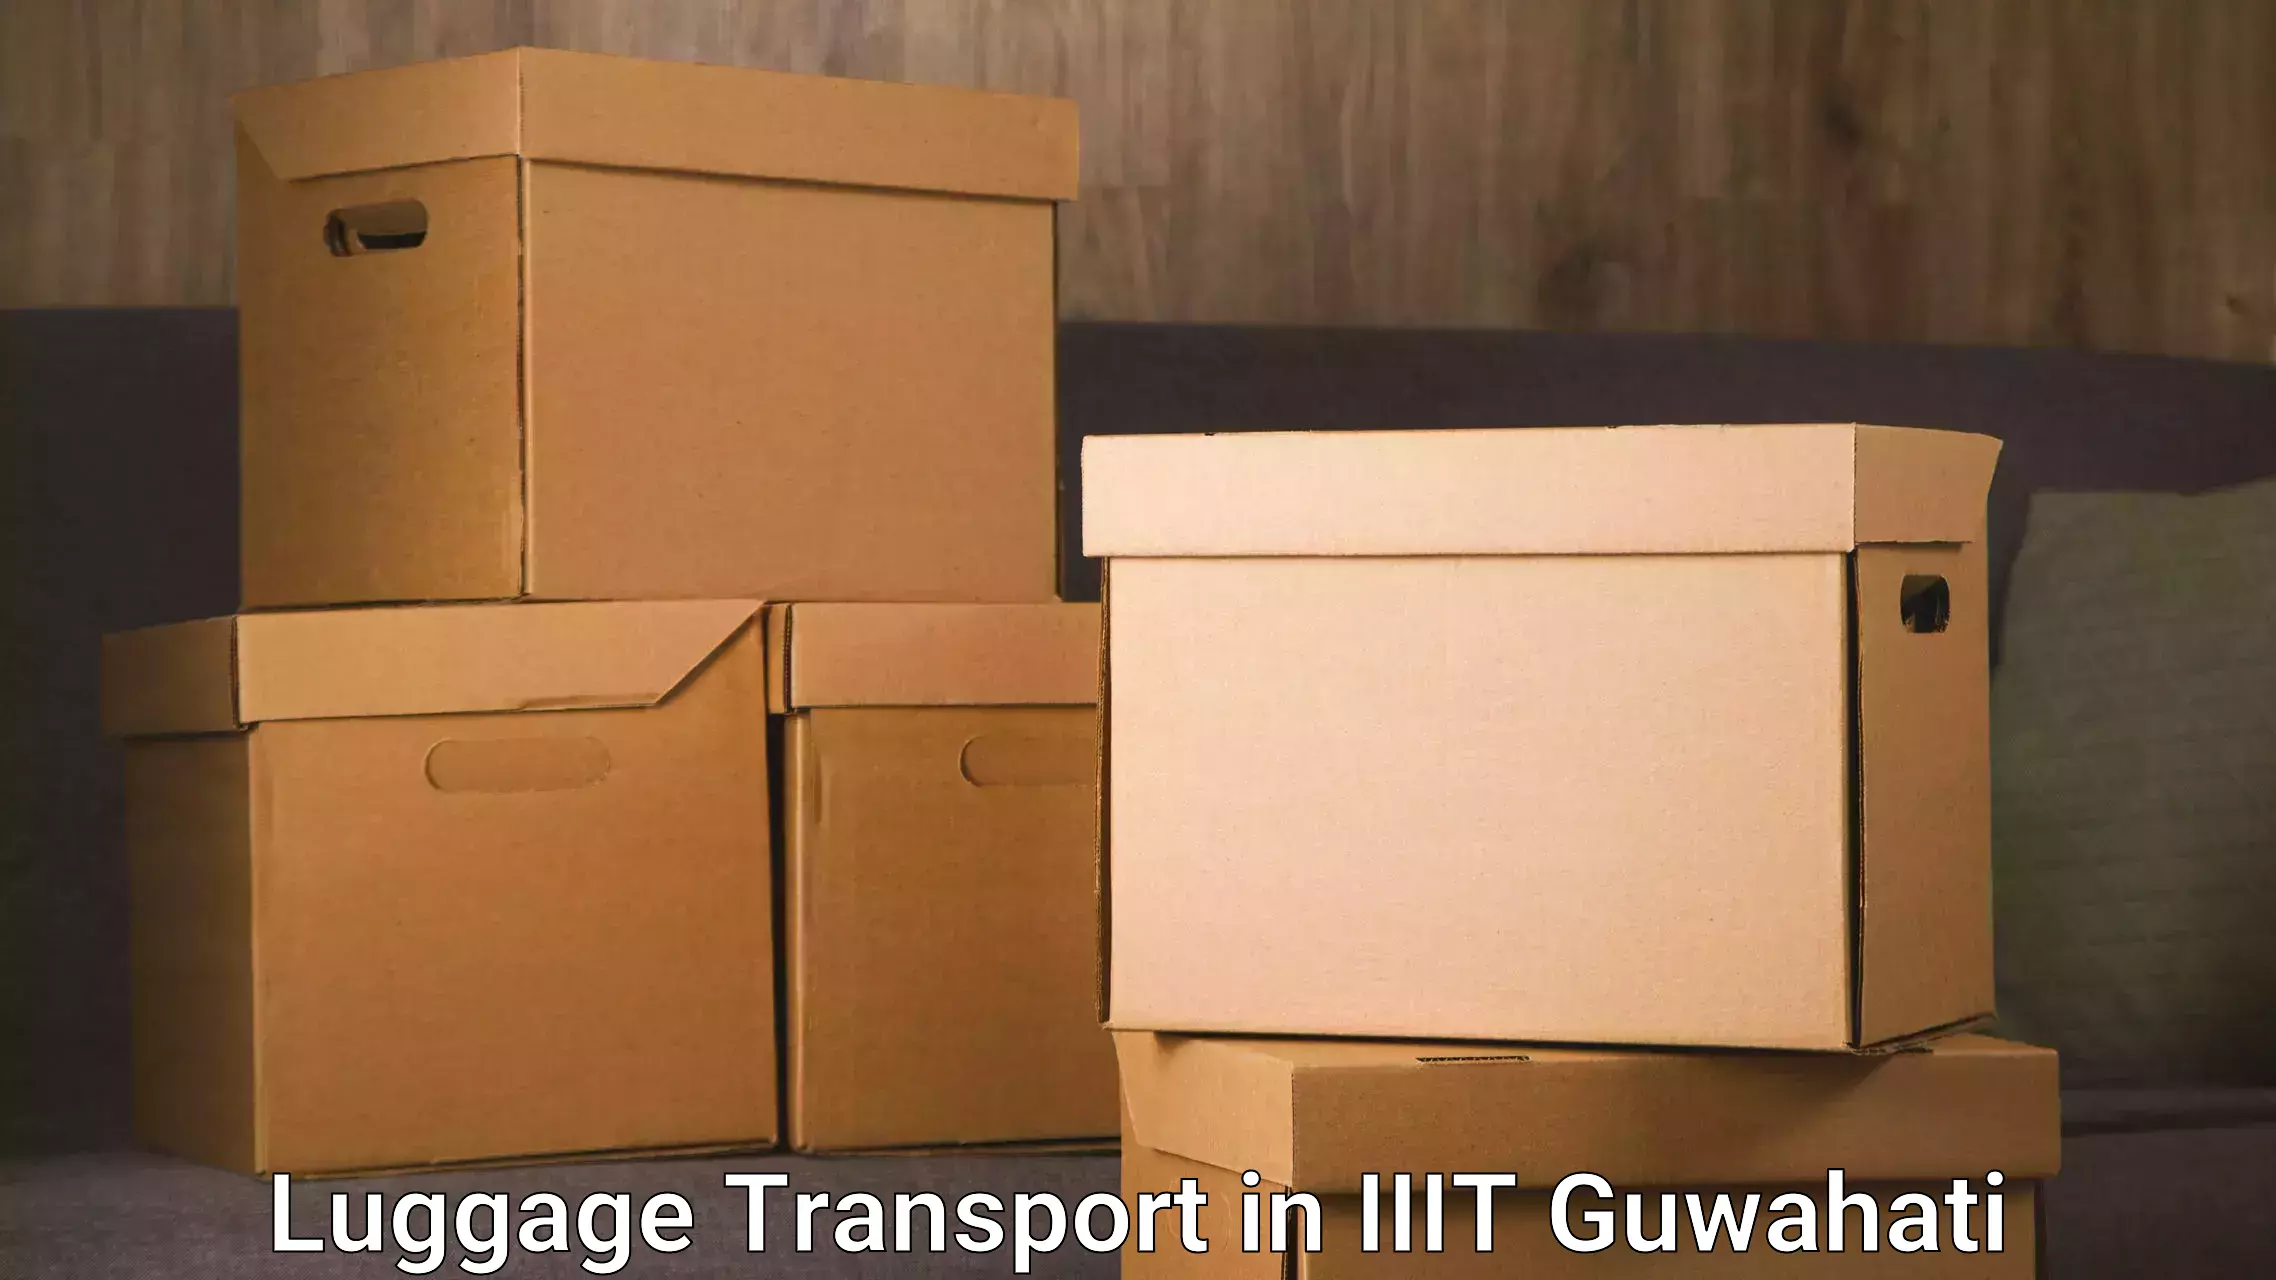 Luggage delivery optimization in IIIT Guwahati